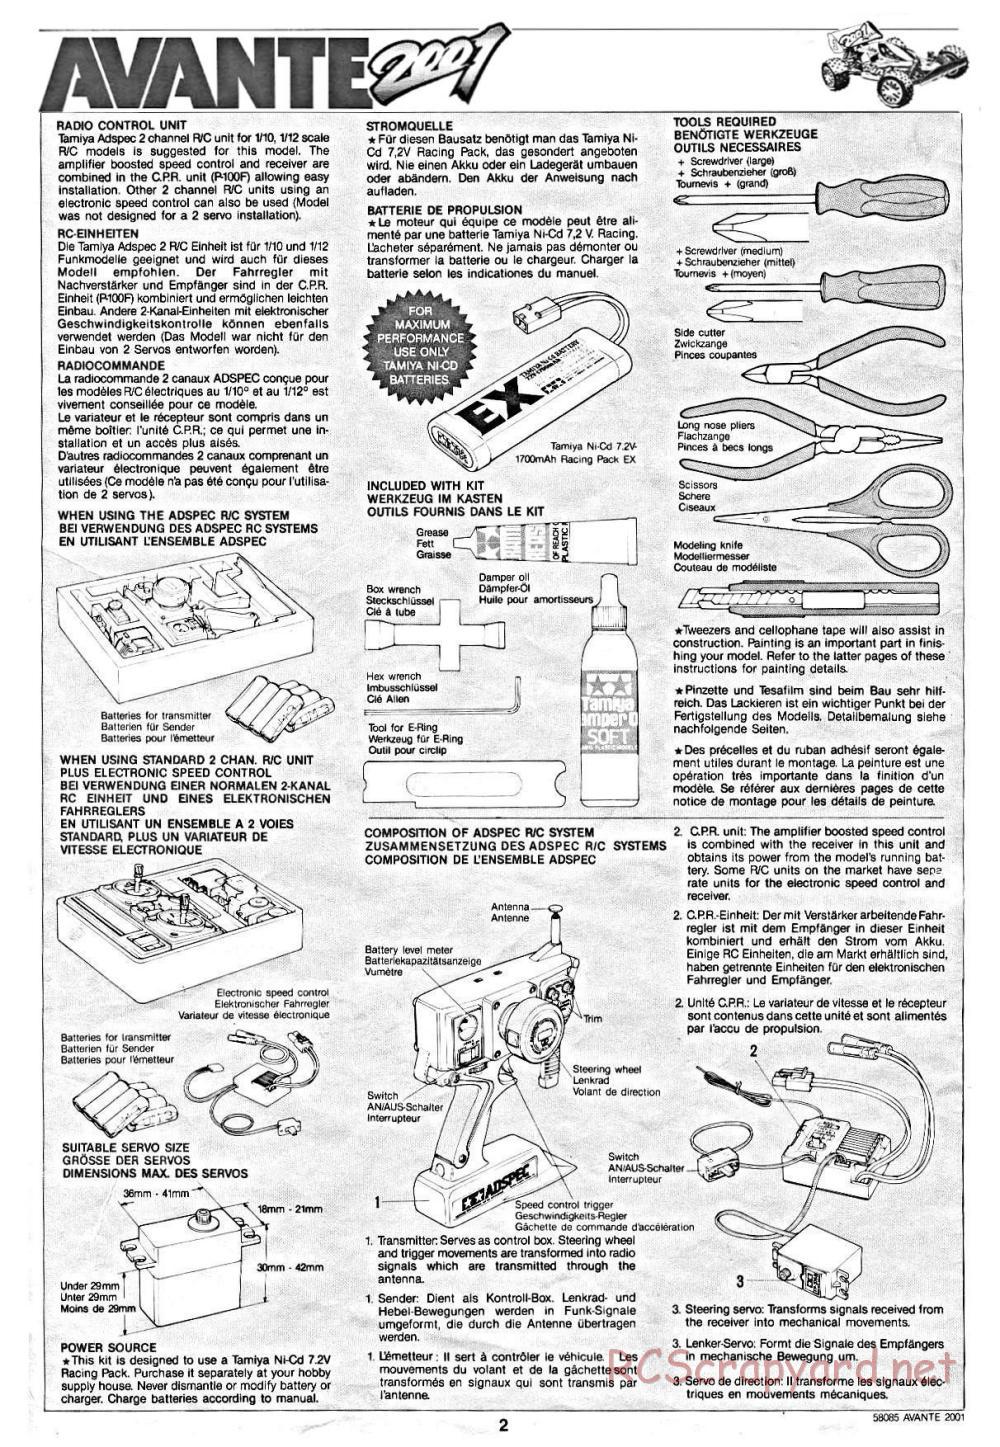 Tamiya - Avante 2001 - 58085 - Manual - Page 2